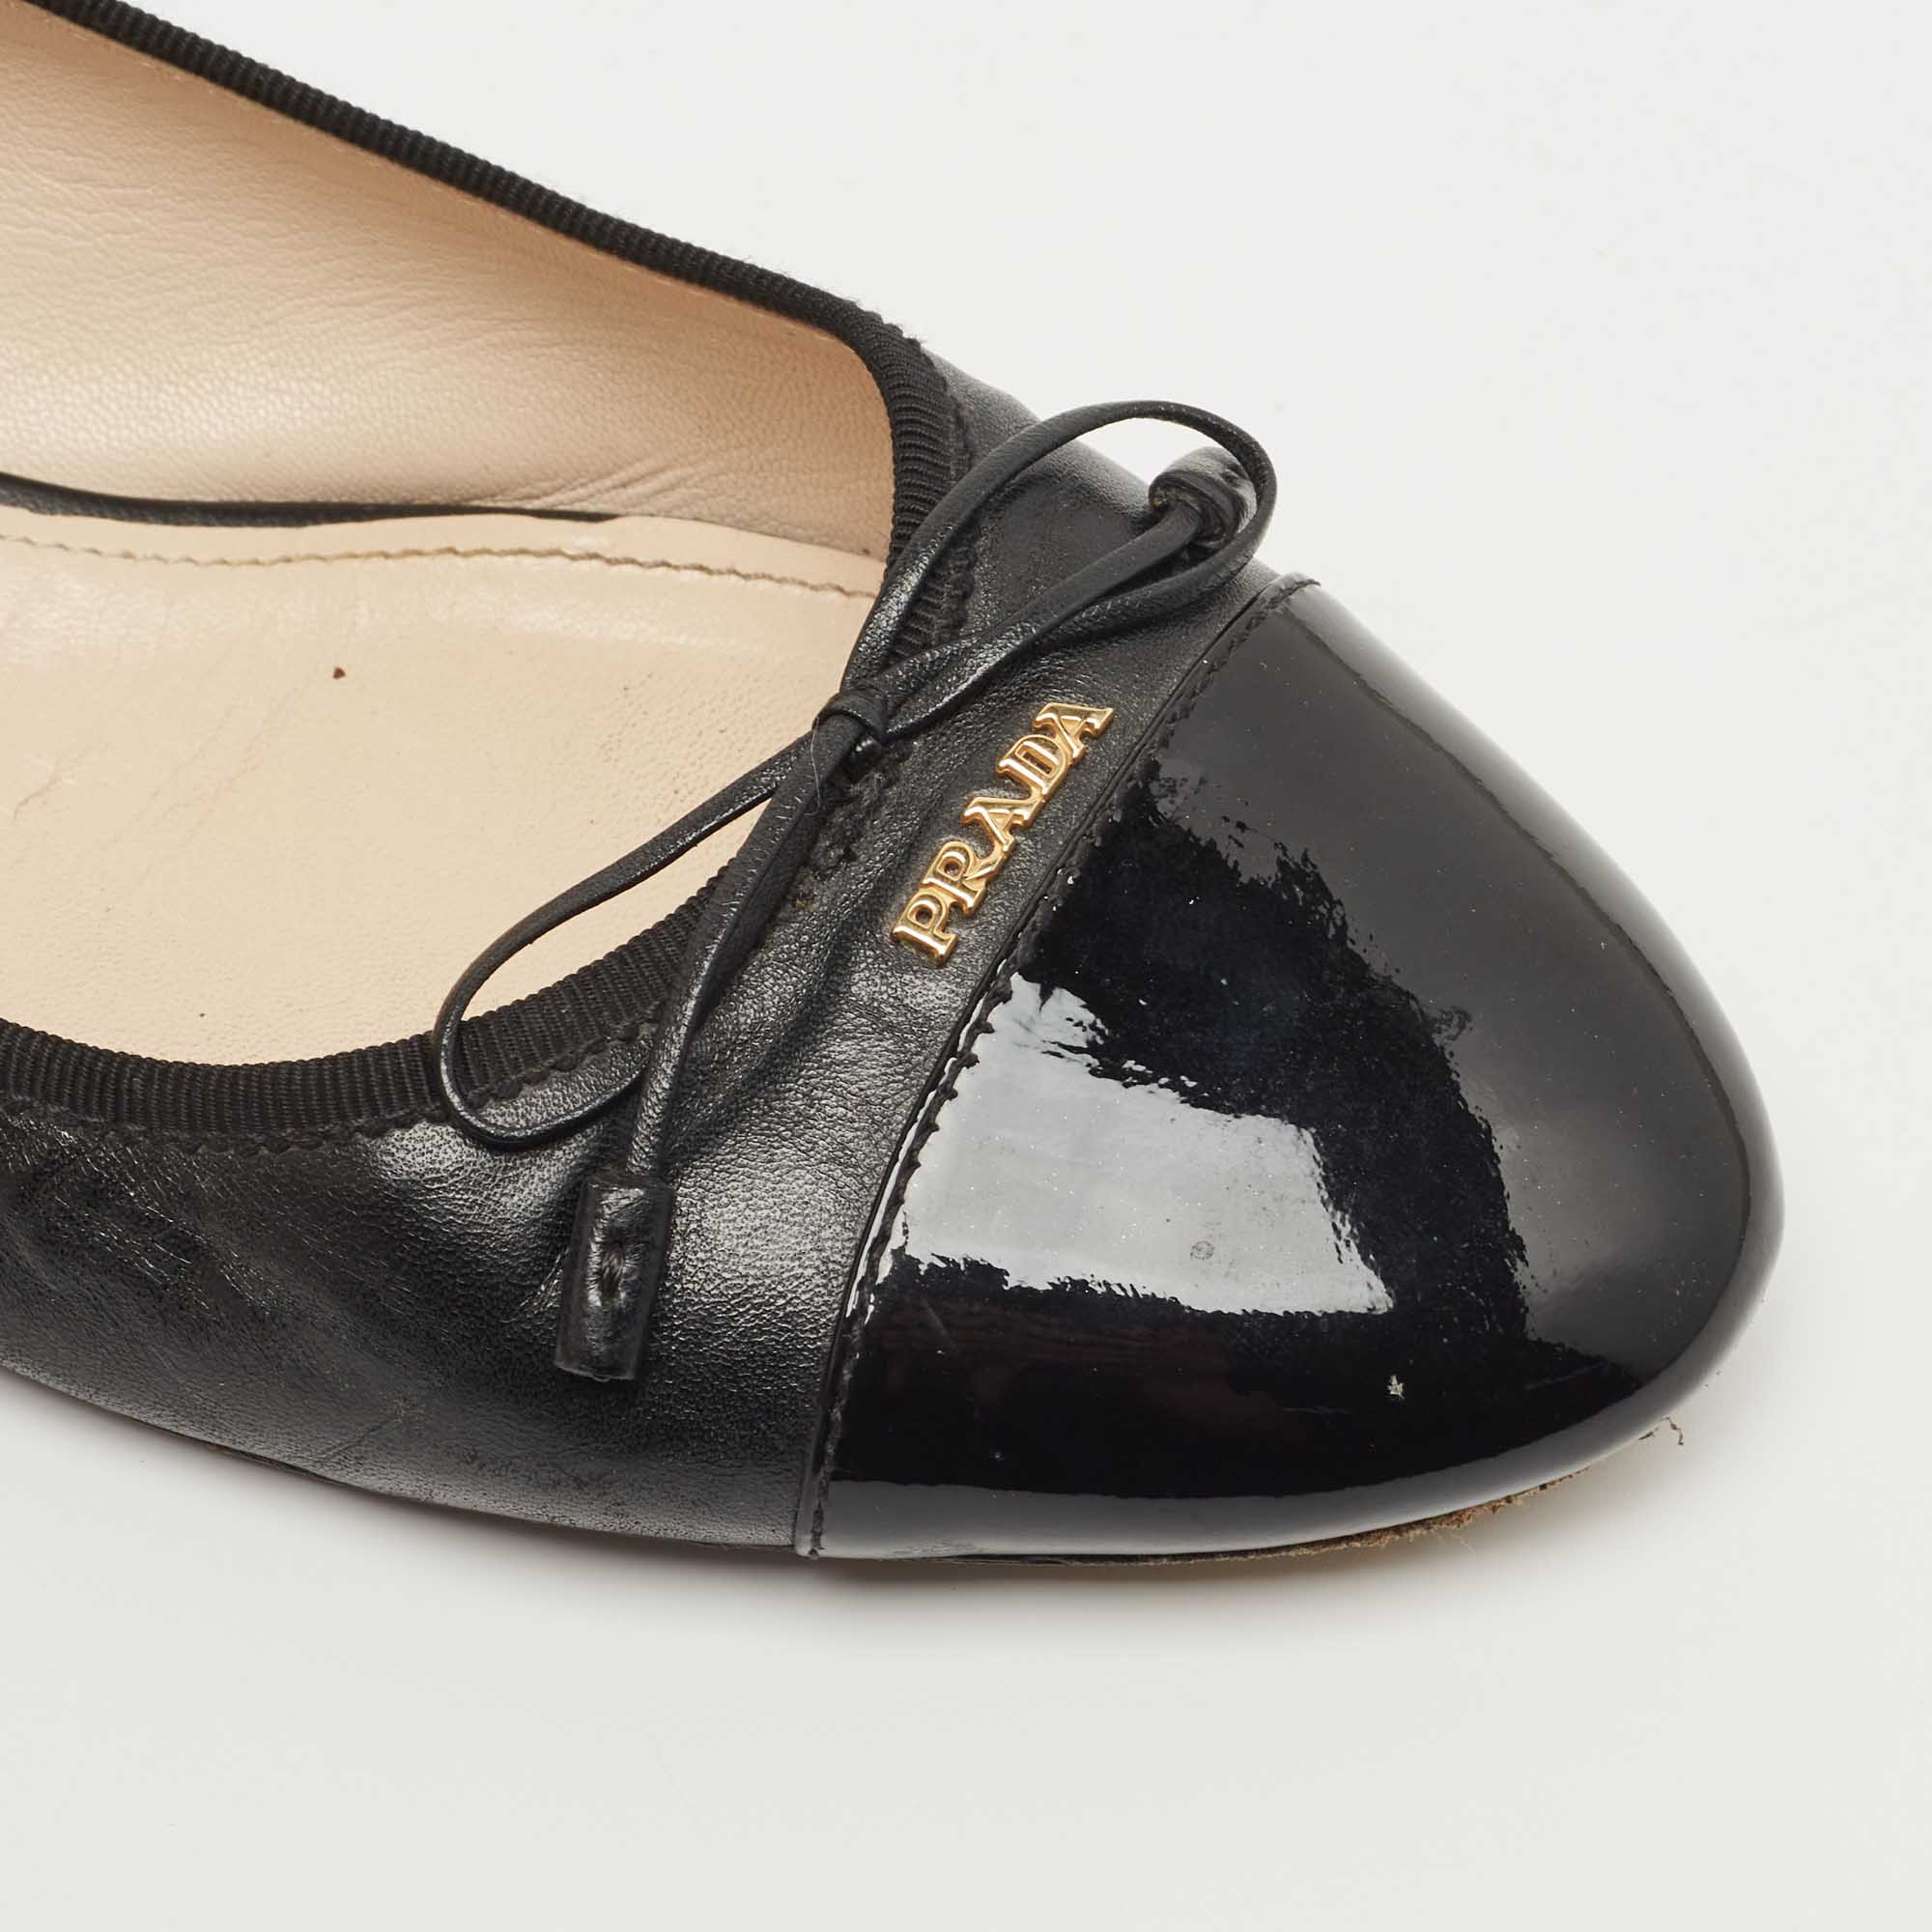 Prada Black Patent And Leather Cap Toe Ballet Flats Size 39